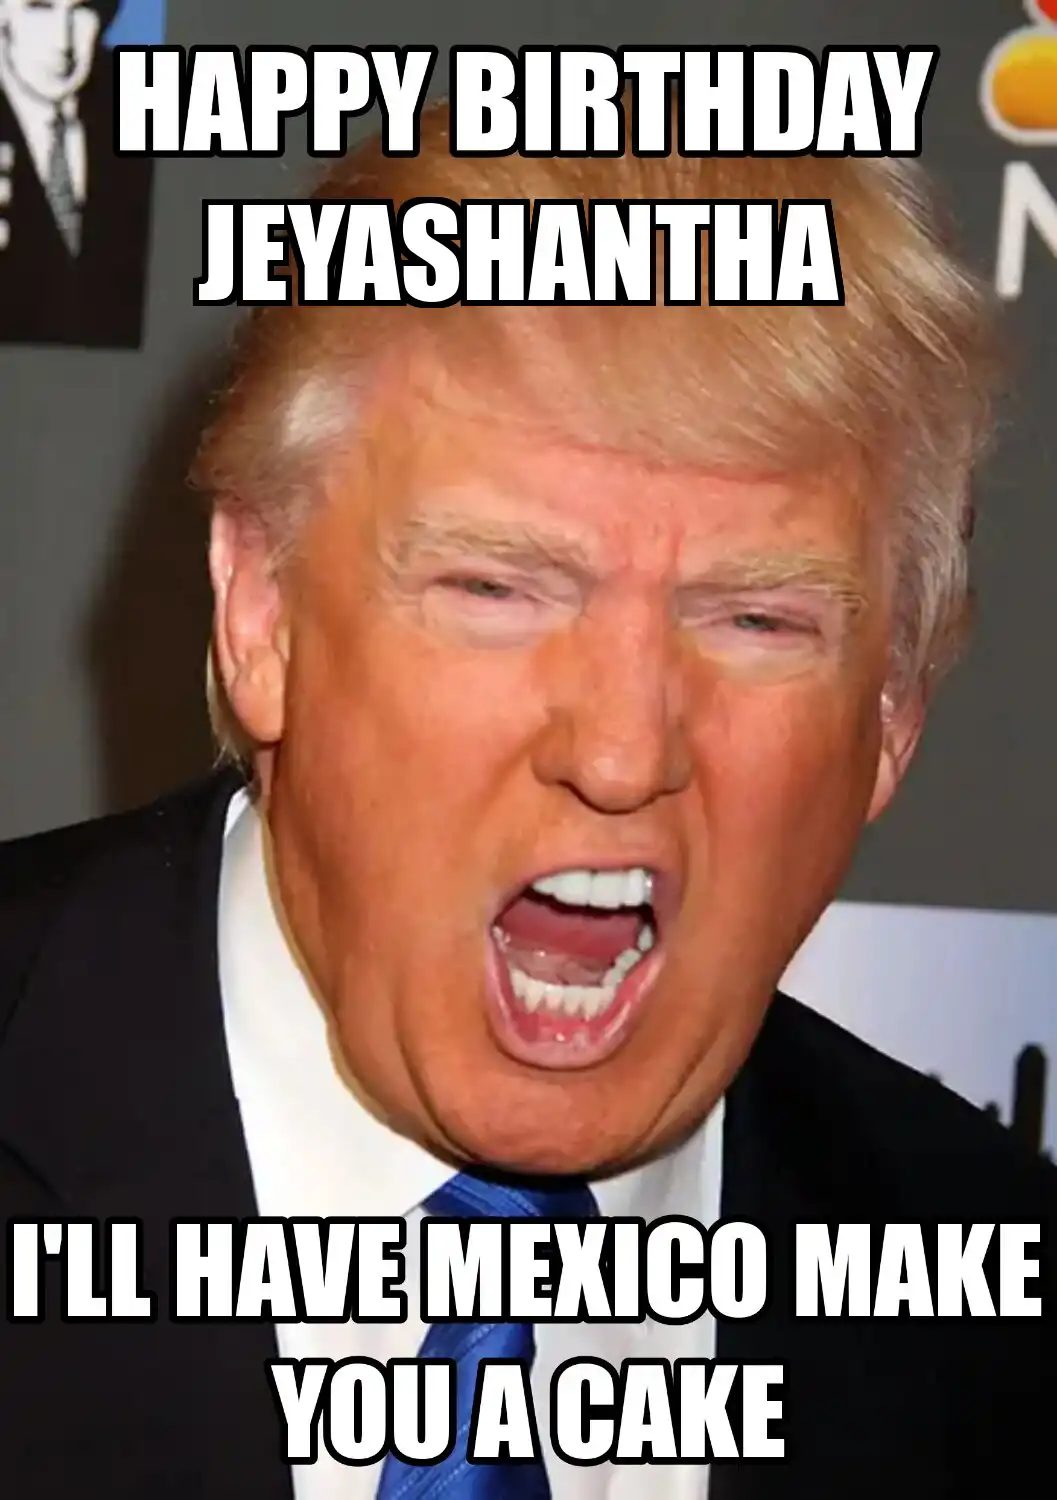 Happy Birthday Jeyashantha Mexico Make You A Cake Meme